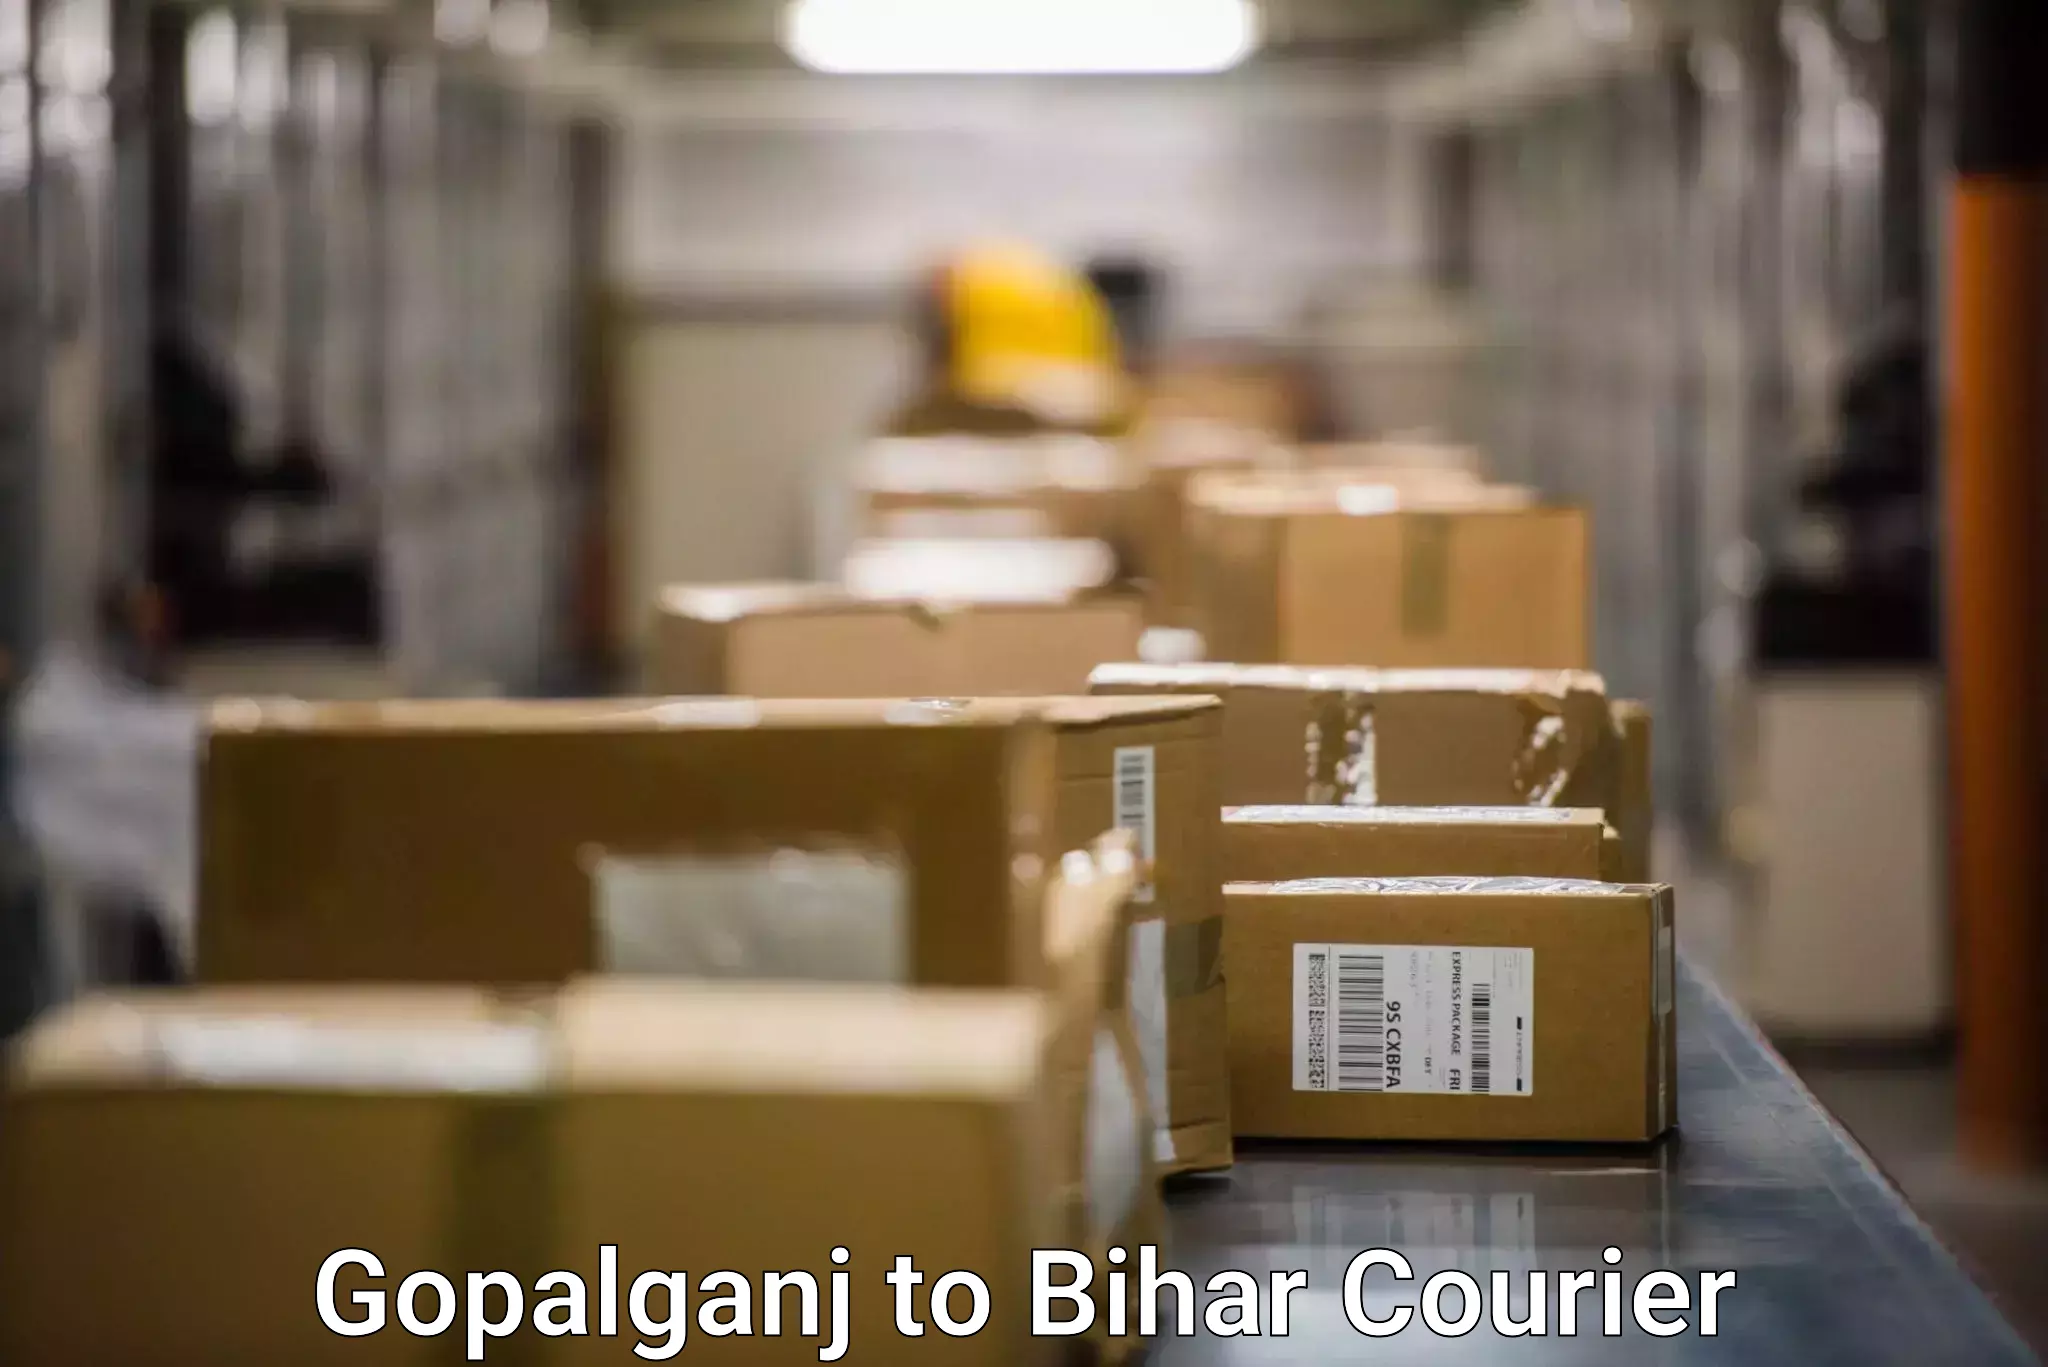 Courier service comparison Gopalganj to Biraul